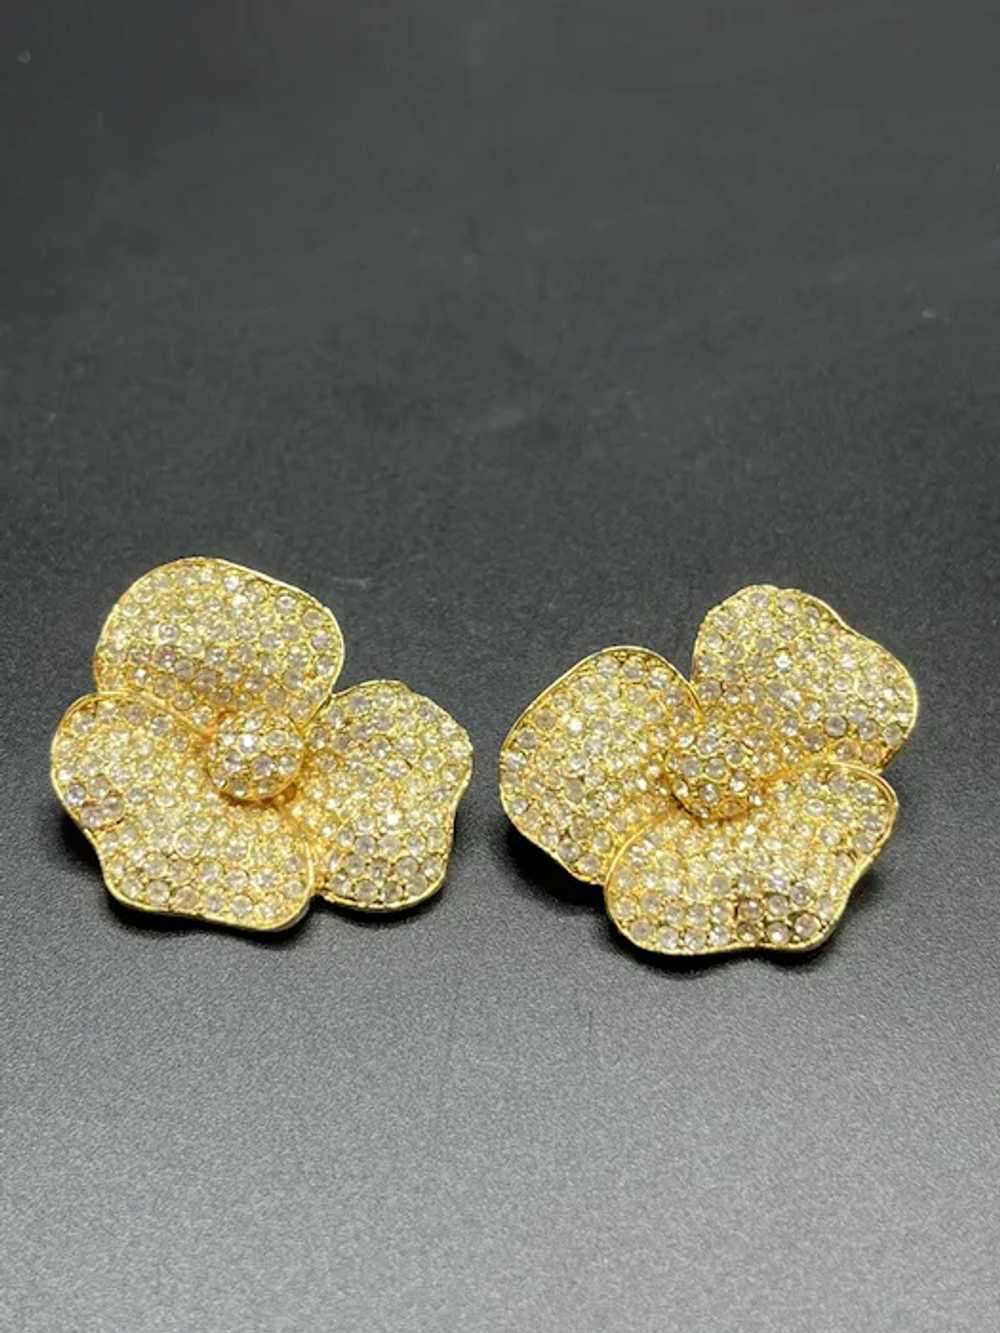 Kenneth Jay Lane Large Gold Petal Flower Earrings - image 6